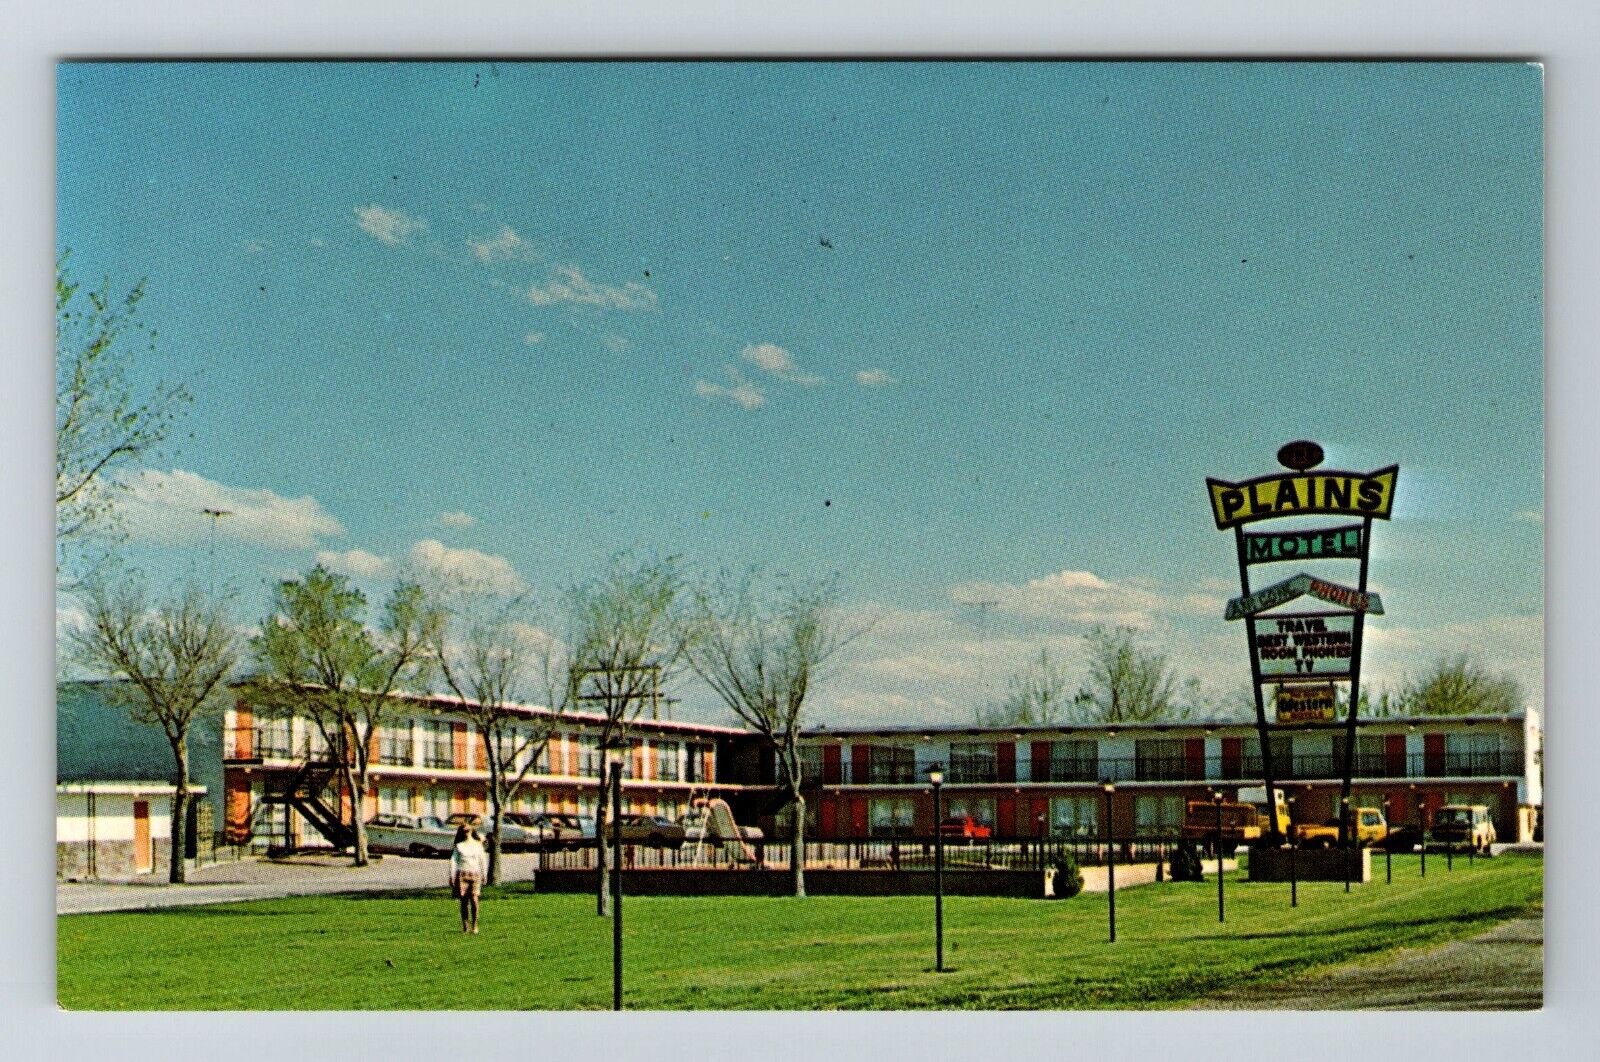 Wall SD-South Dakota, The Plains Motel, Exterior, Vintage Postcard